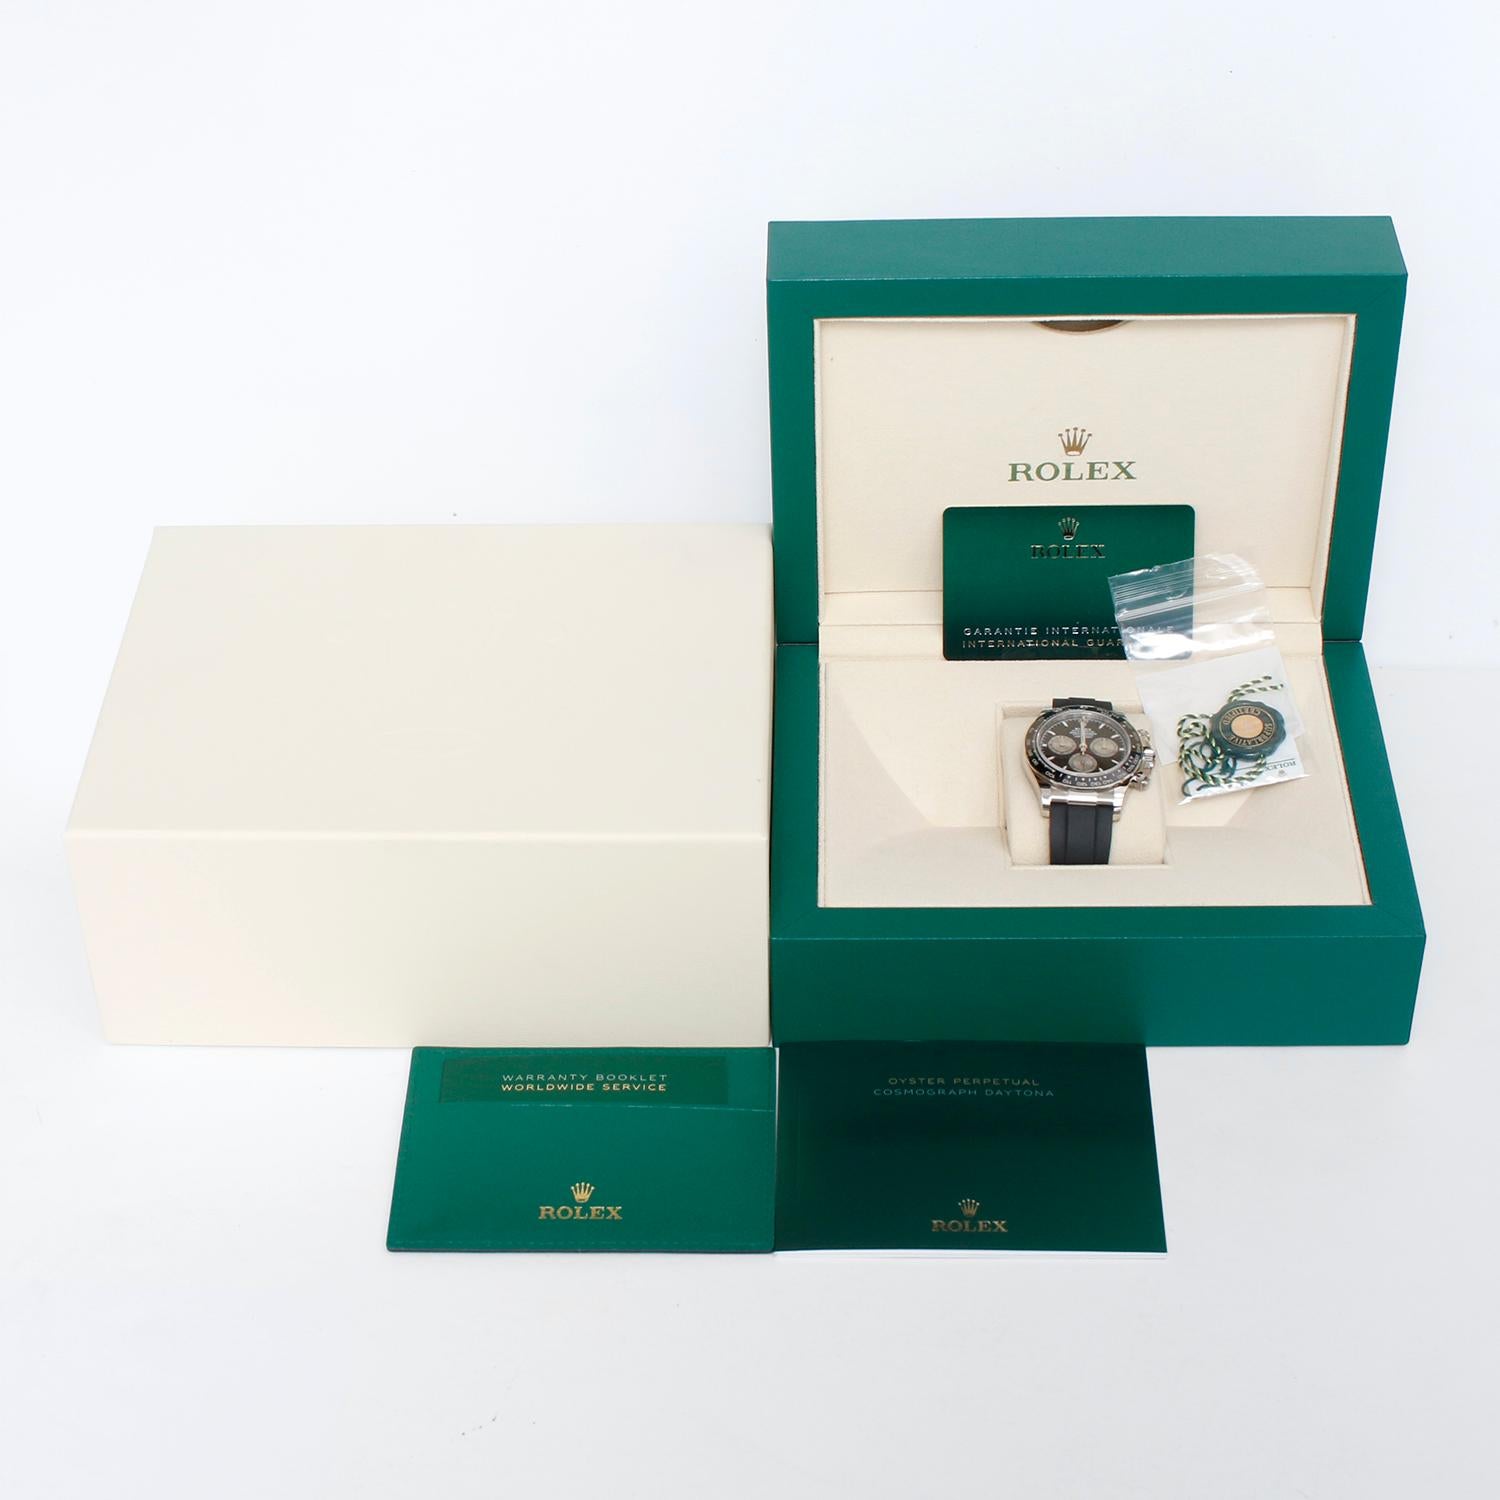 Rolex Cosmograph Daytona White Gold Watch 126519LN In New Condition For Sale In Dallas, TX